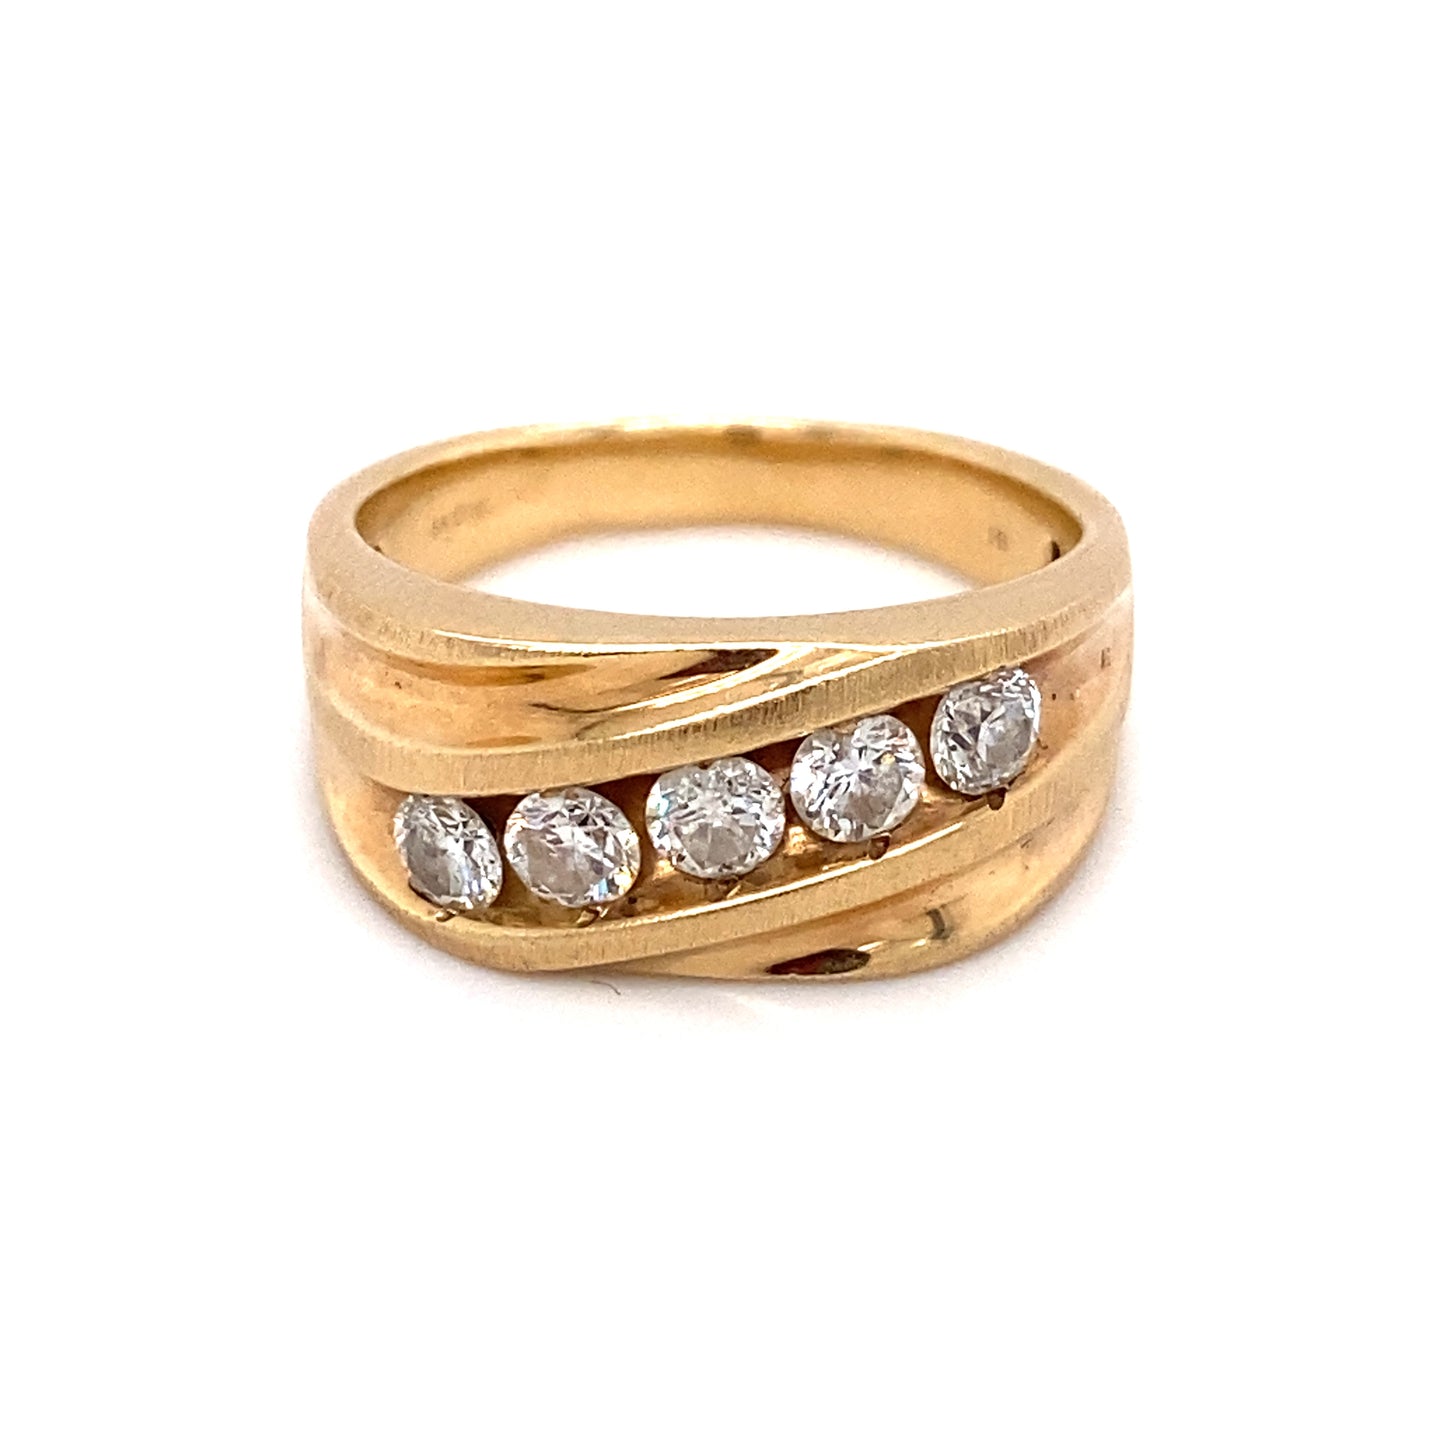 Circa 1980s Five Stone Mens Diamond Ring in 14K Gold